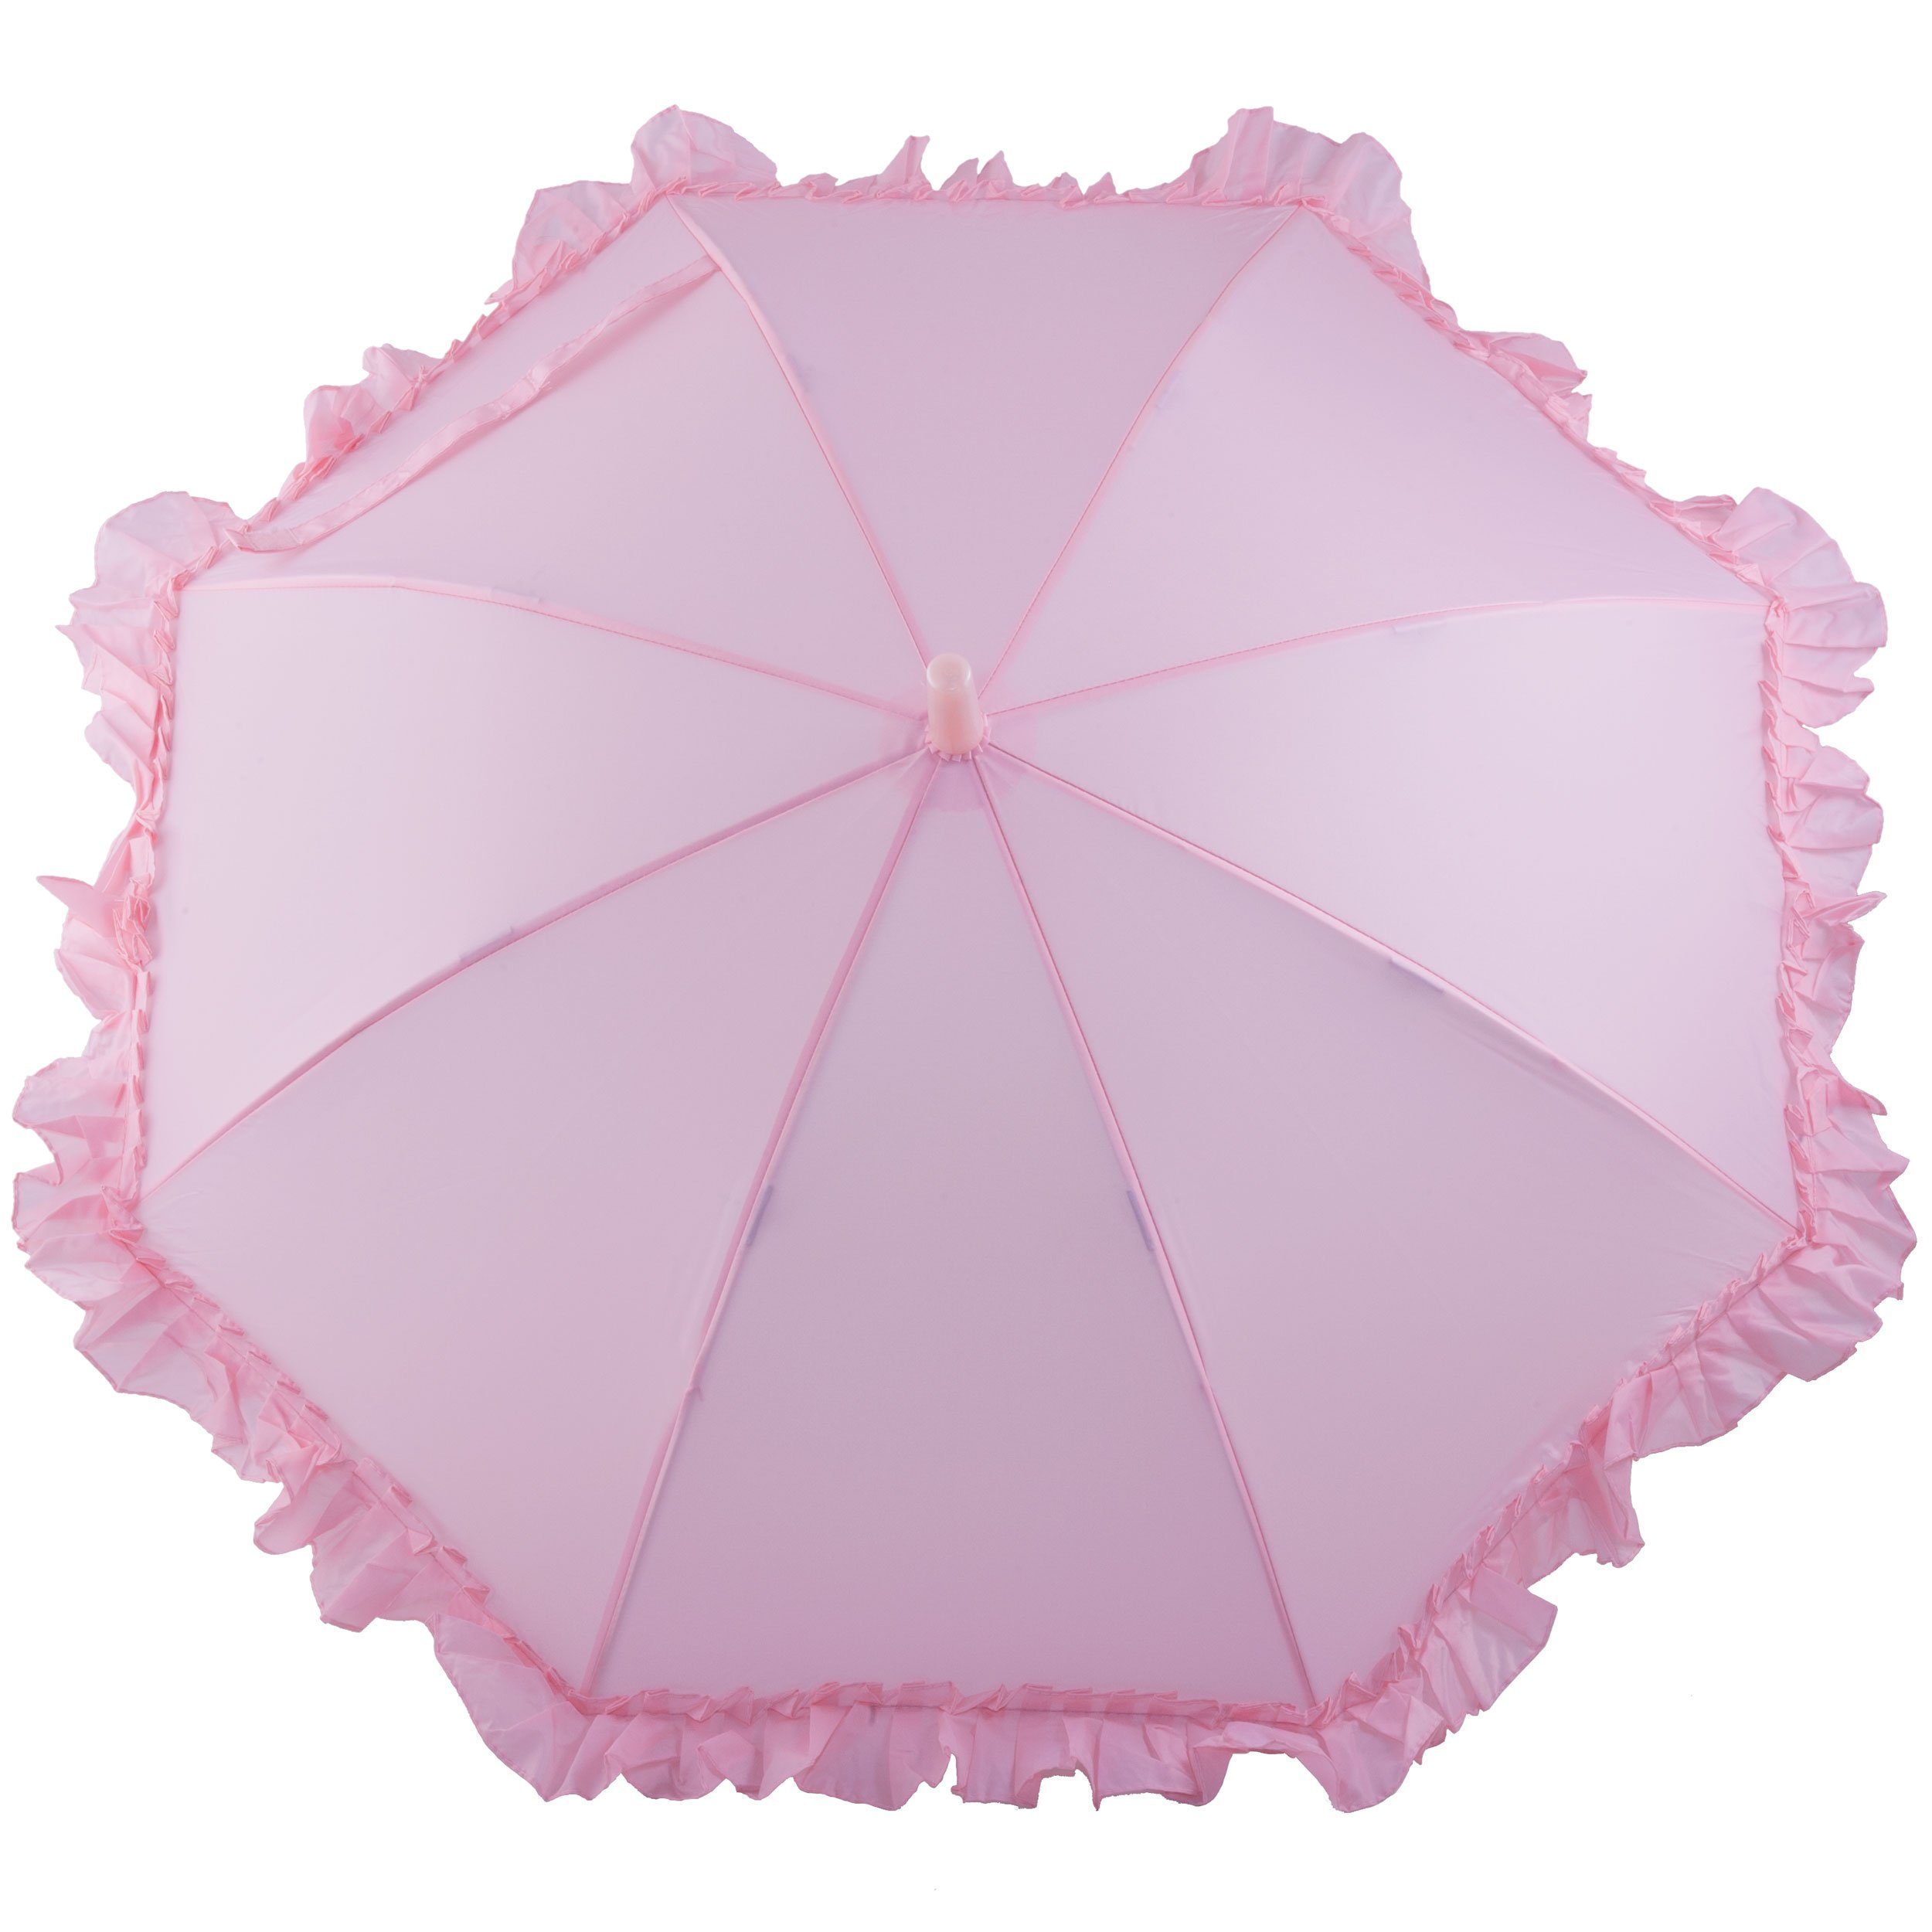 ROSEMARIE SCHULZ Heidelberg Stockregenschirm »Kinderregenschirm für Mädchen  Regenschirm mit Rüschen«, Kinderschirm mit Rüschen online kaufen | OTTO